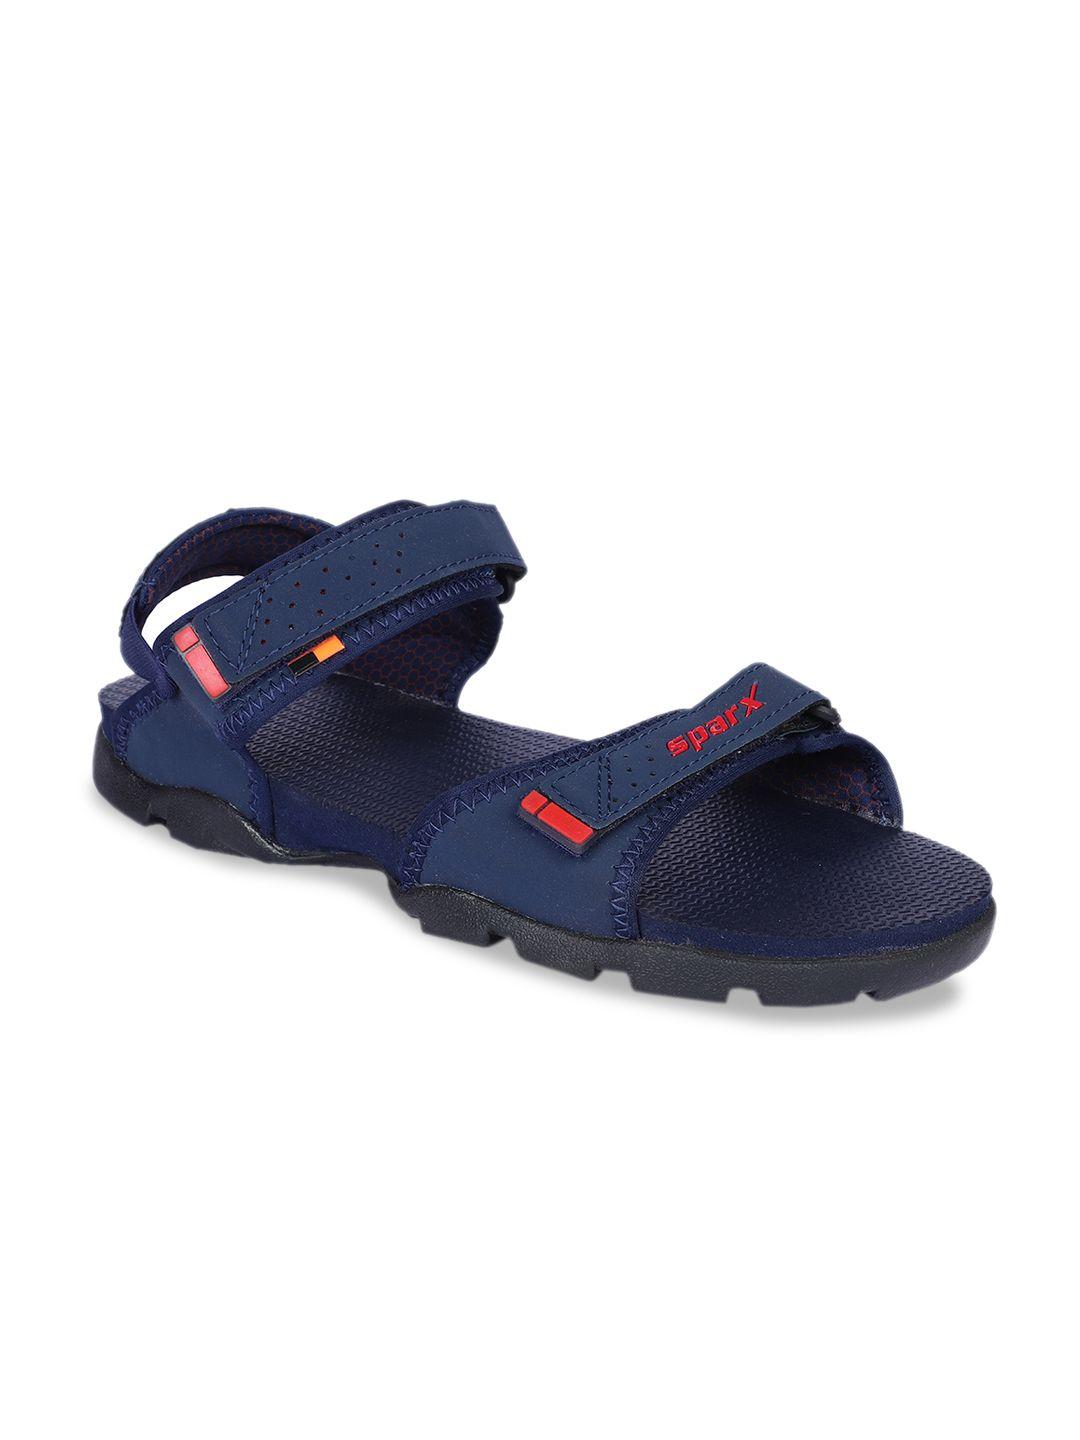 sparx men navy blue & red ss-119 sports sandals